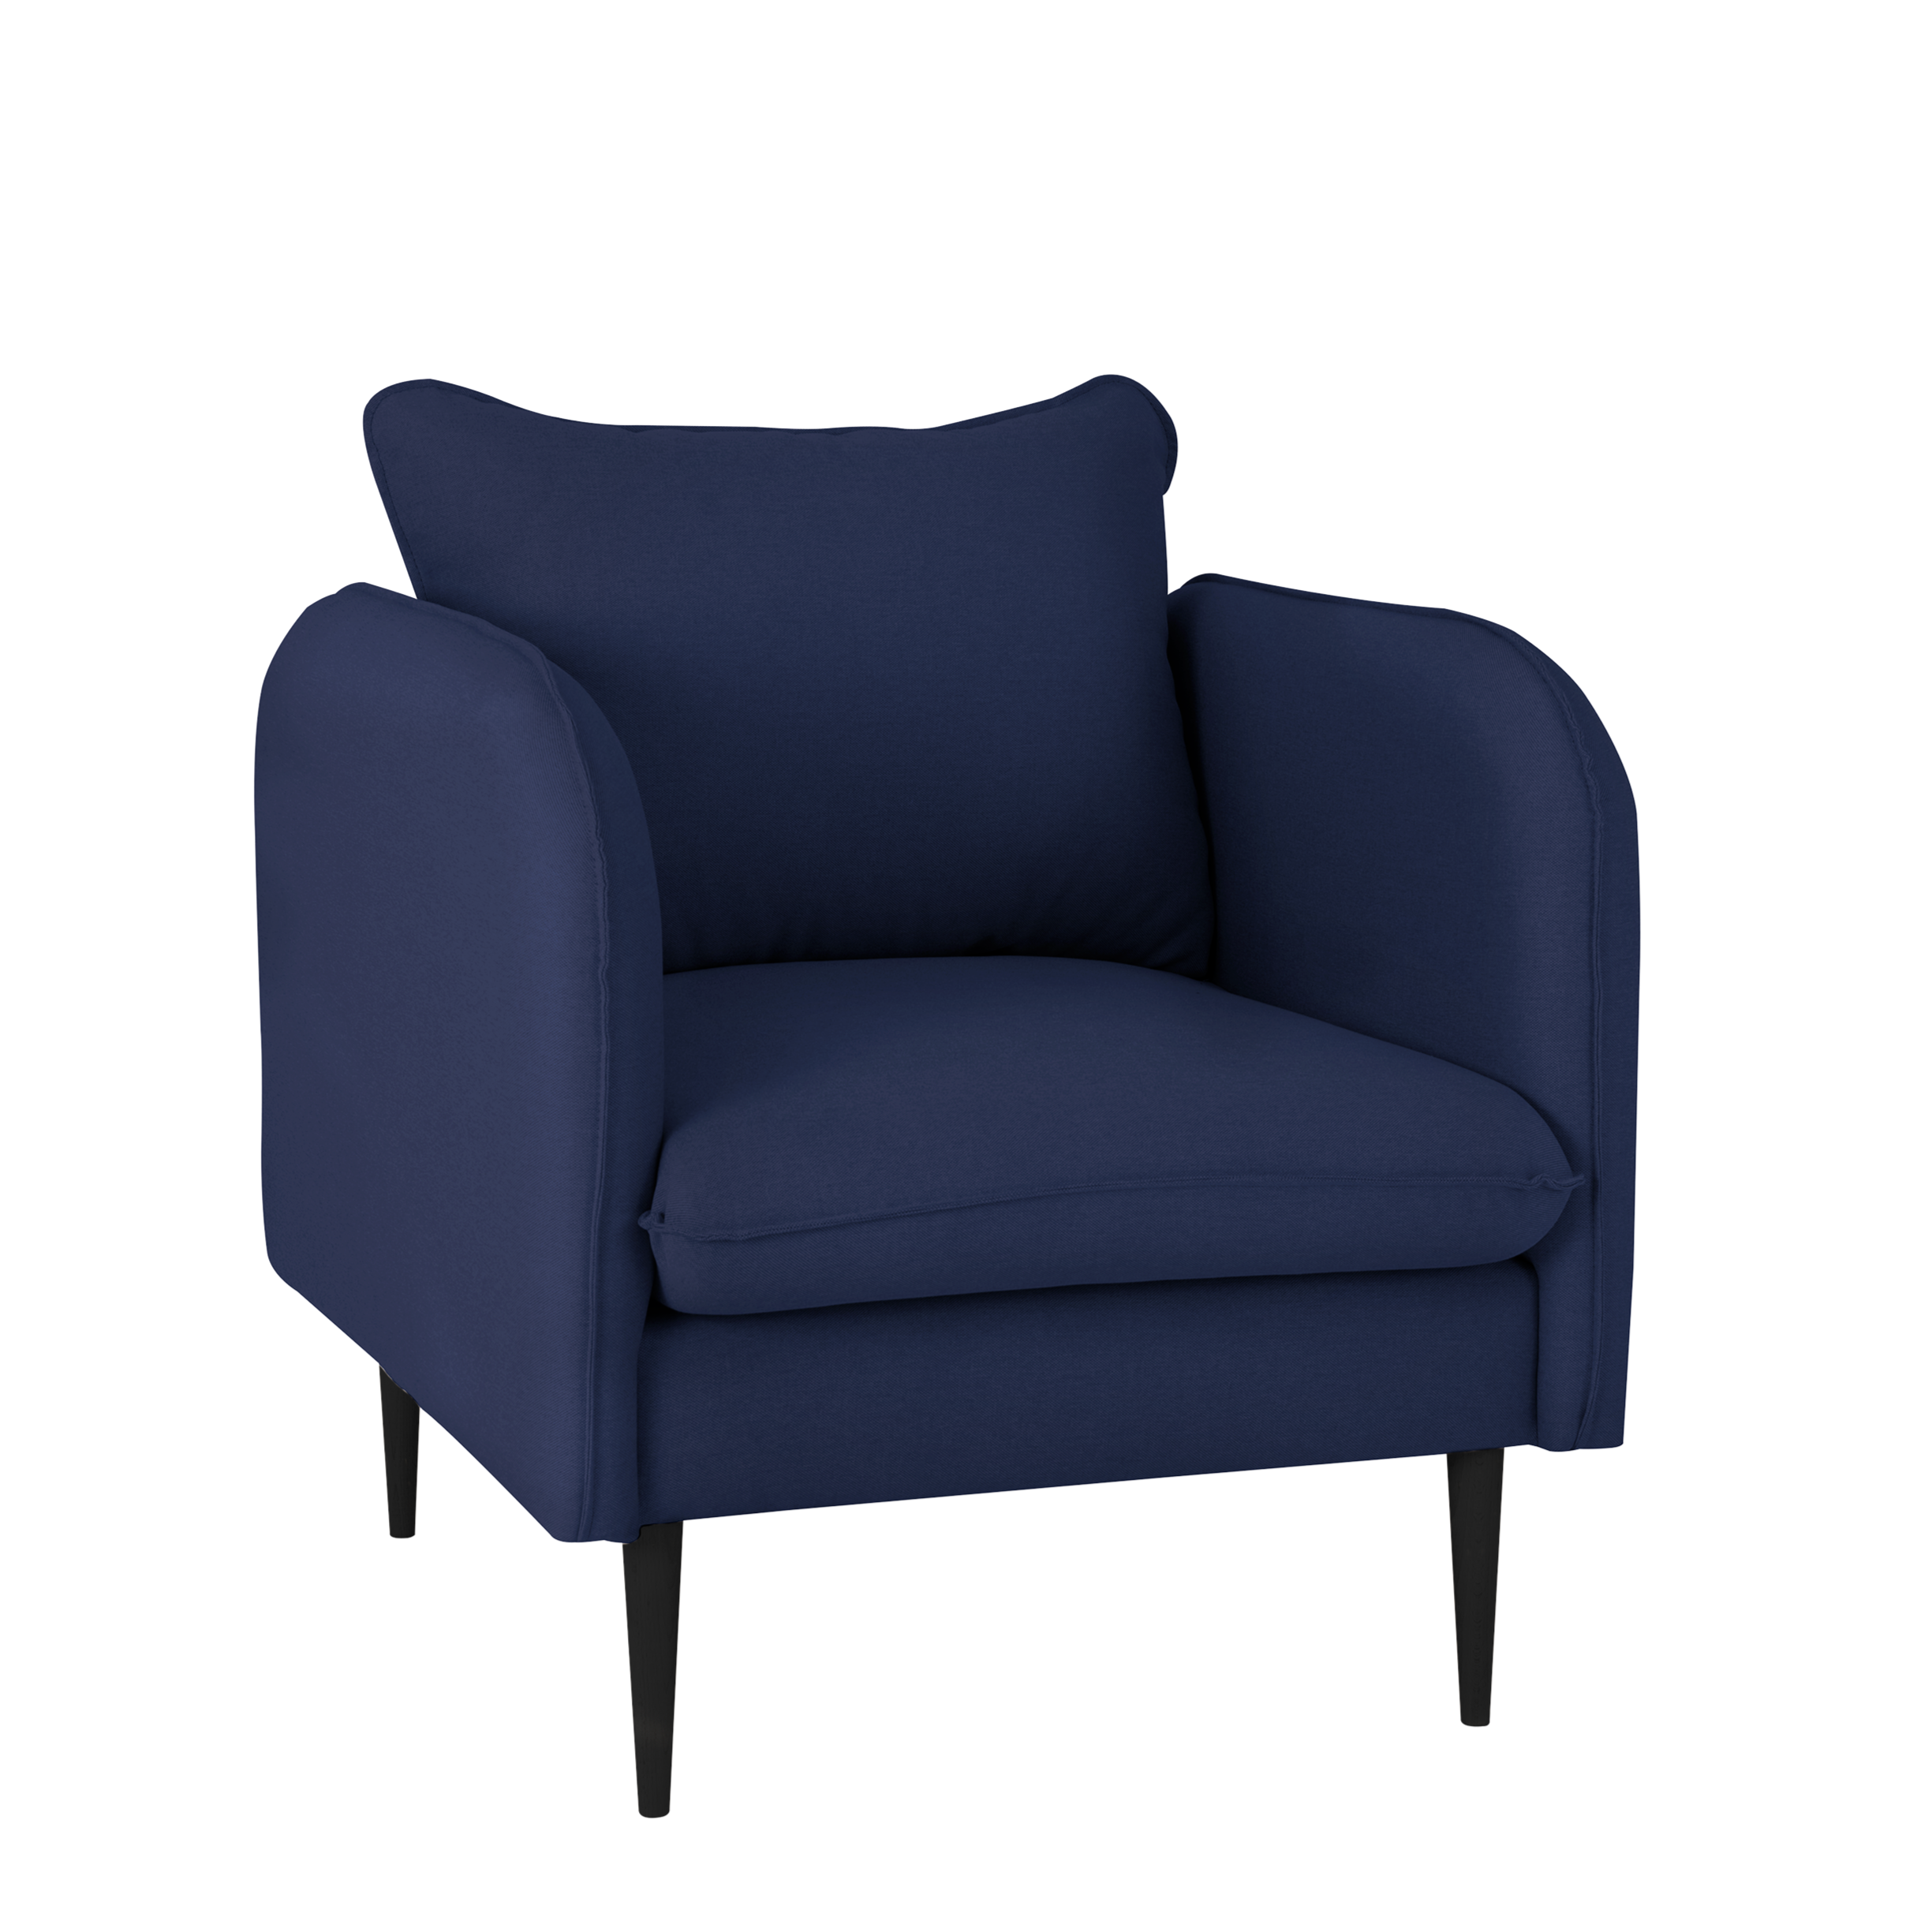 POSH BLACK Armchair upholstery colour blue-white background